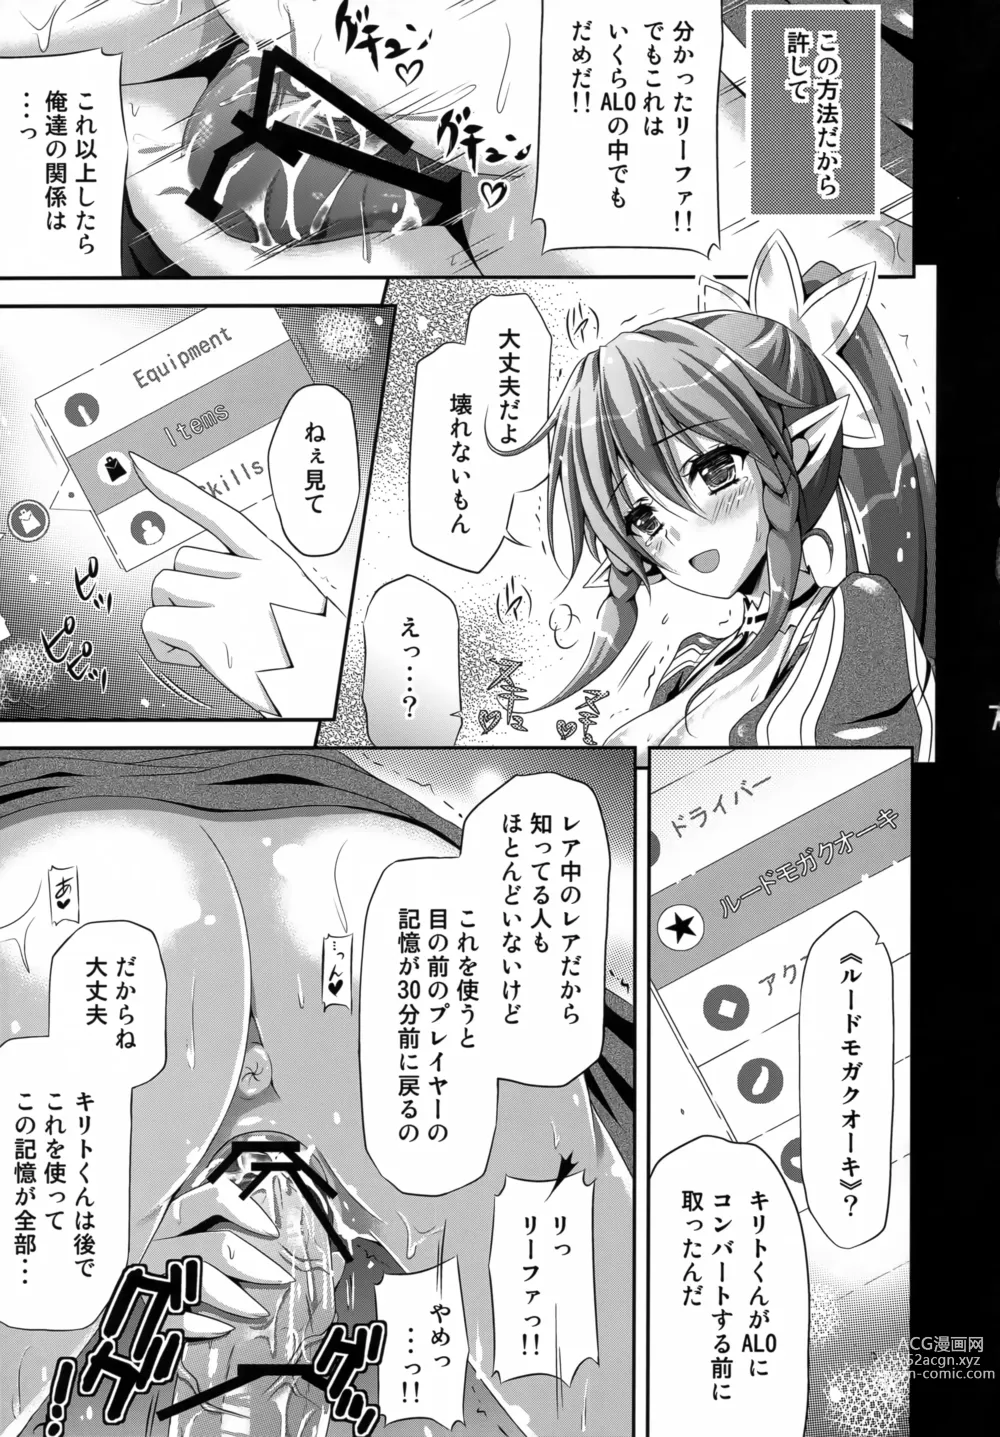 Page 6 of doujinshi Leafa x Quest